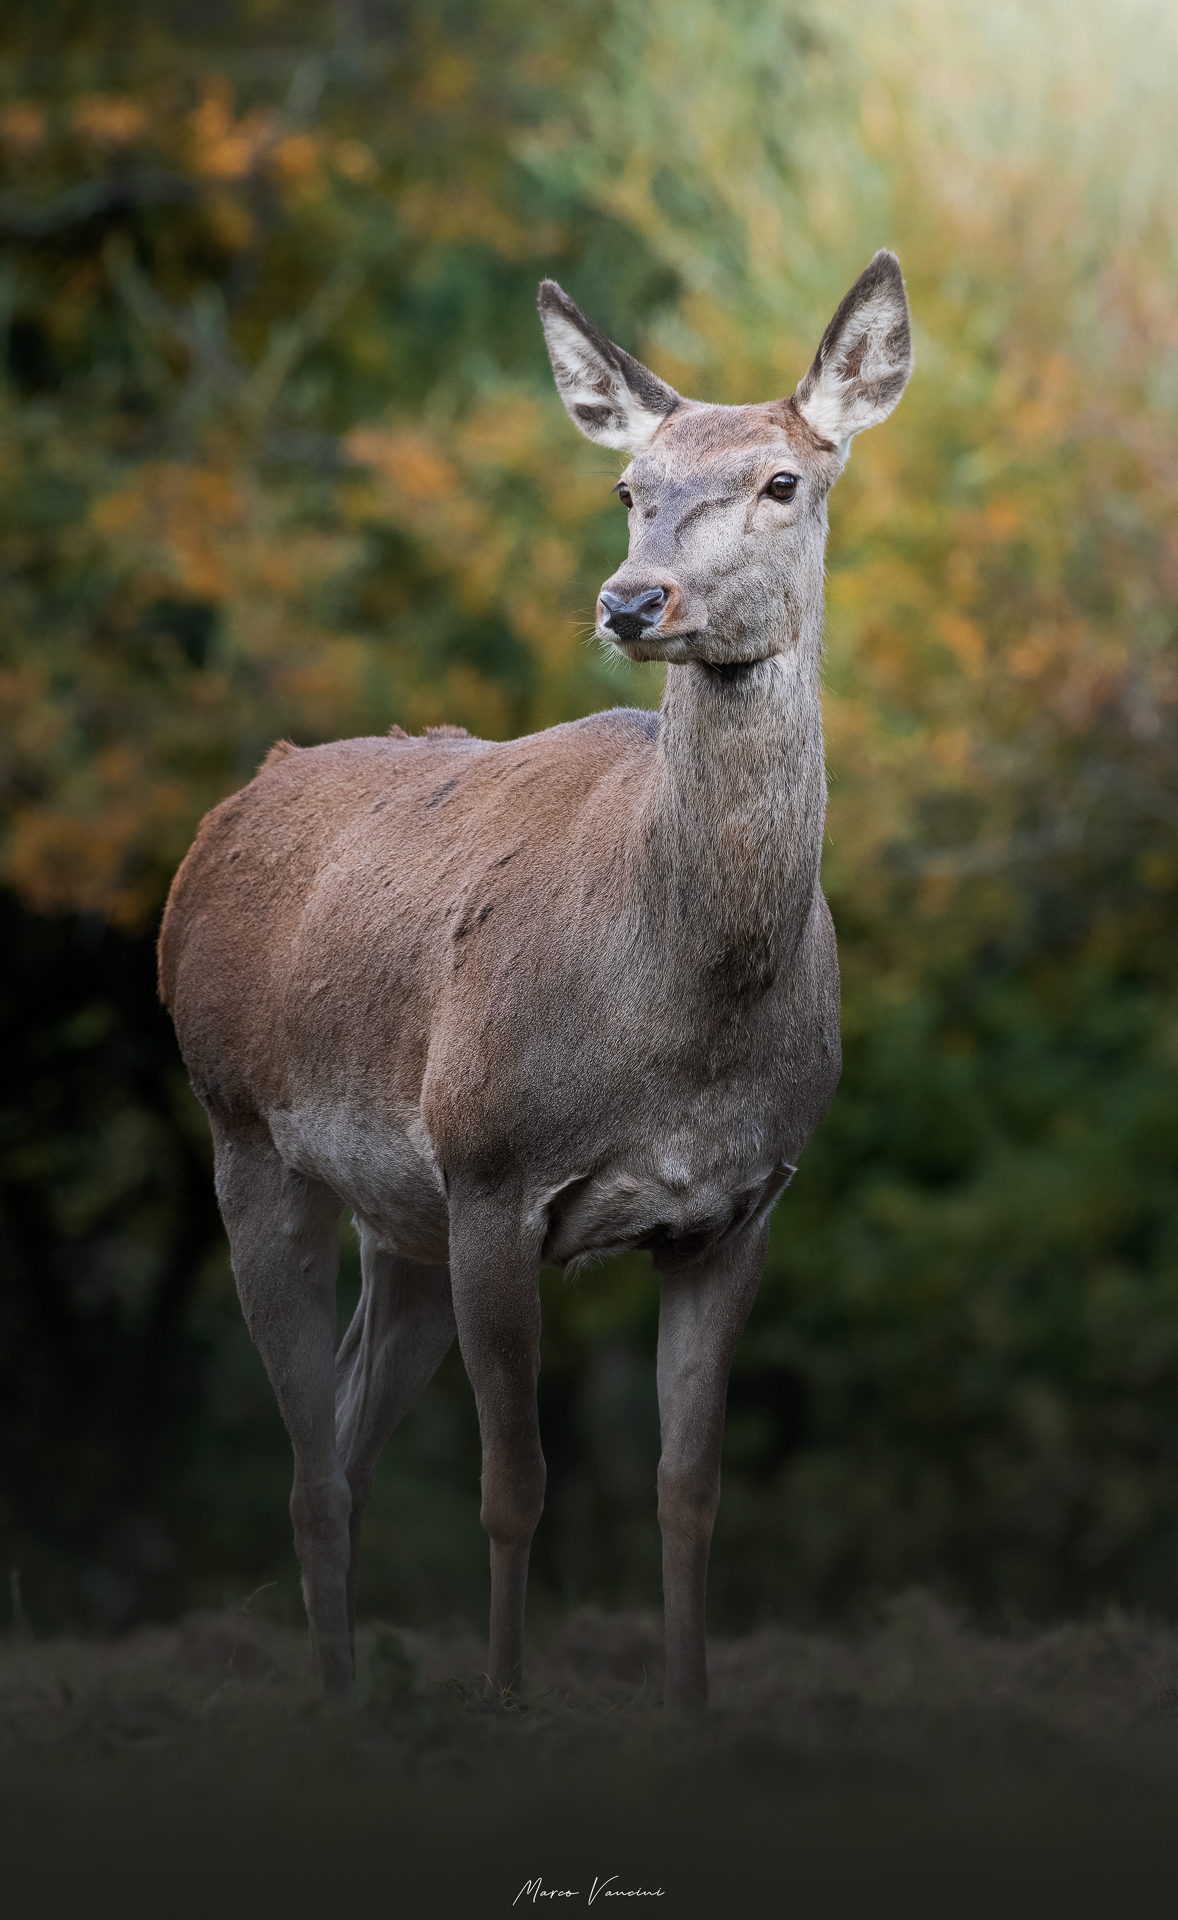 A beautiful deer...